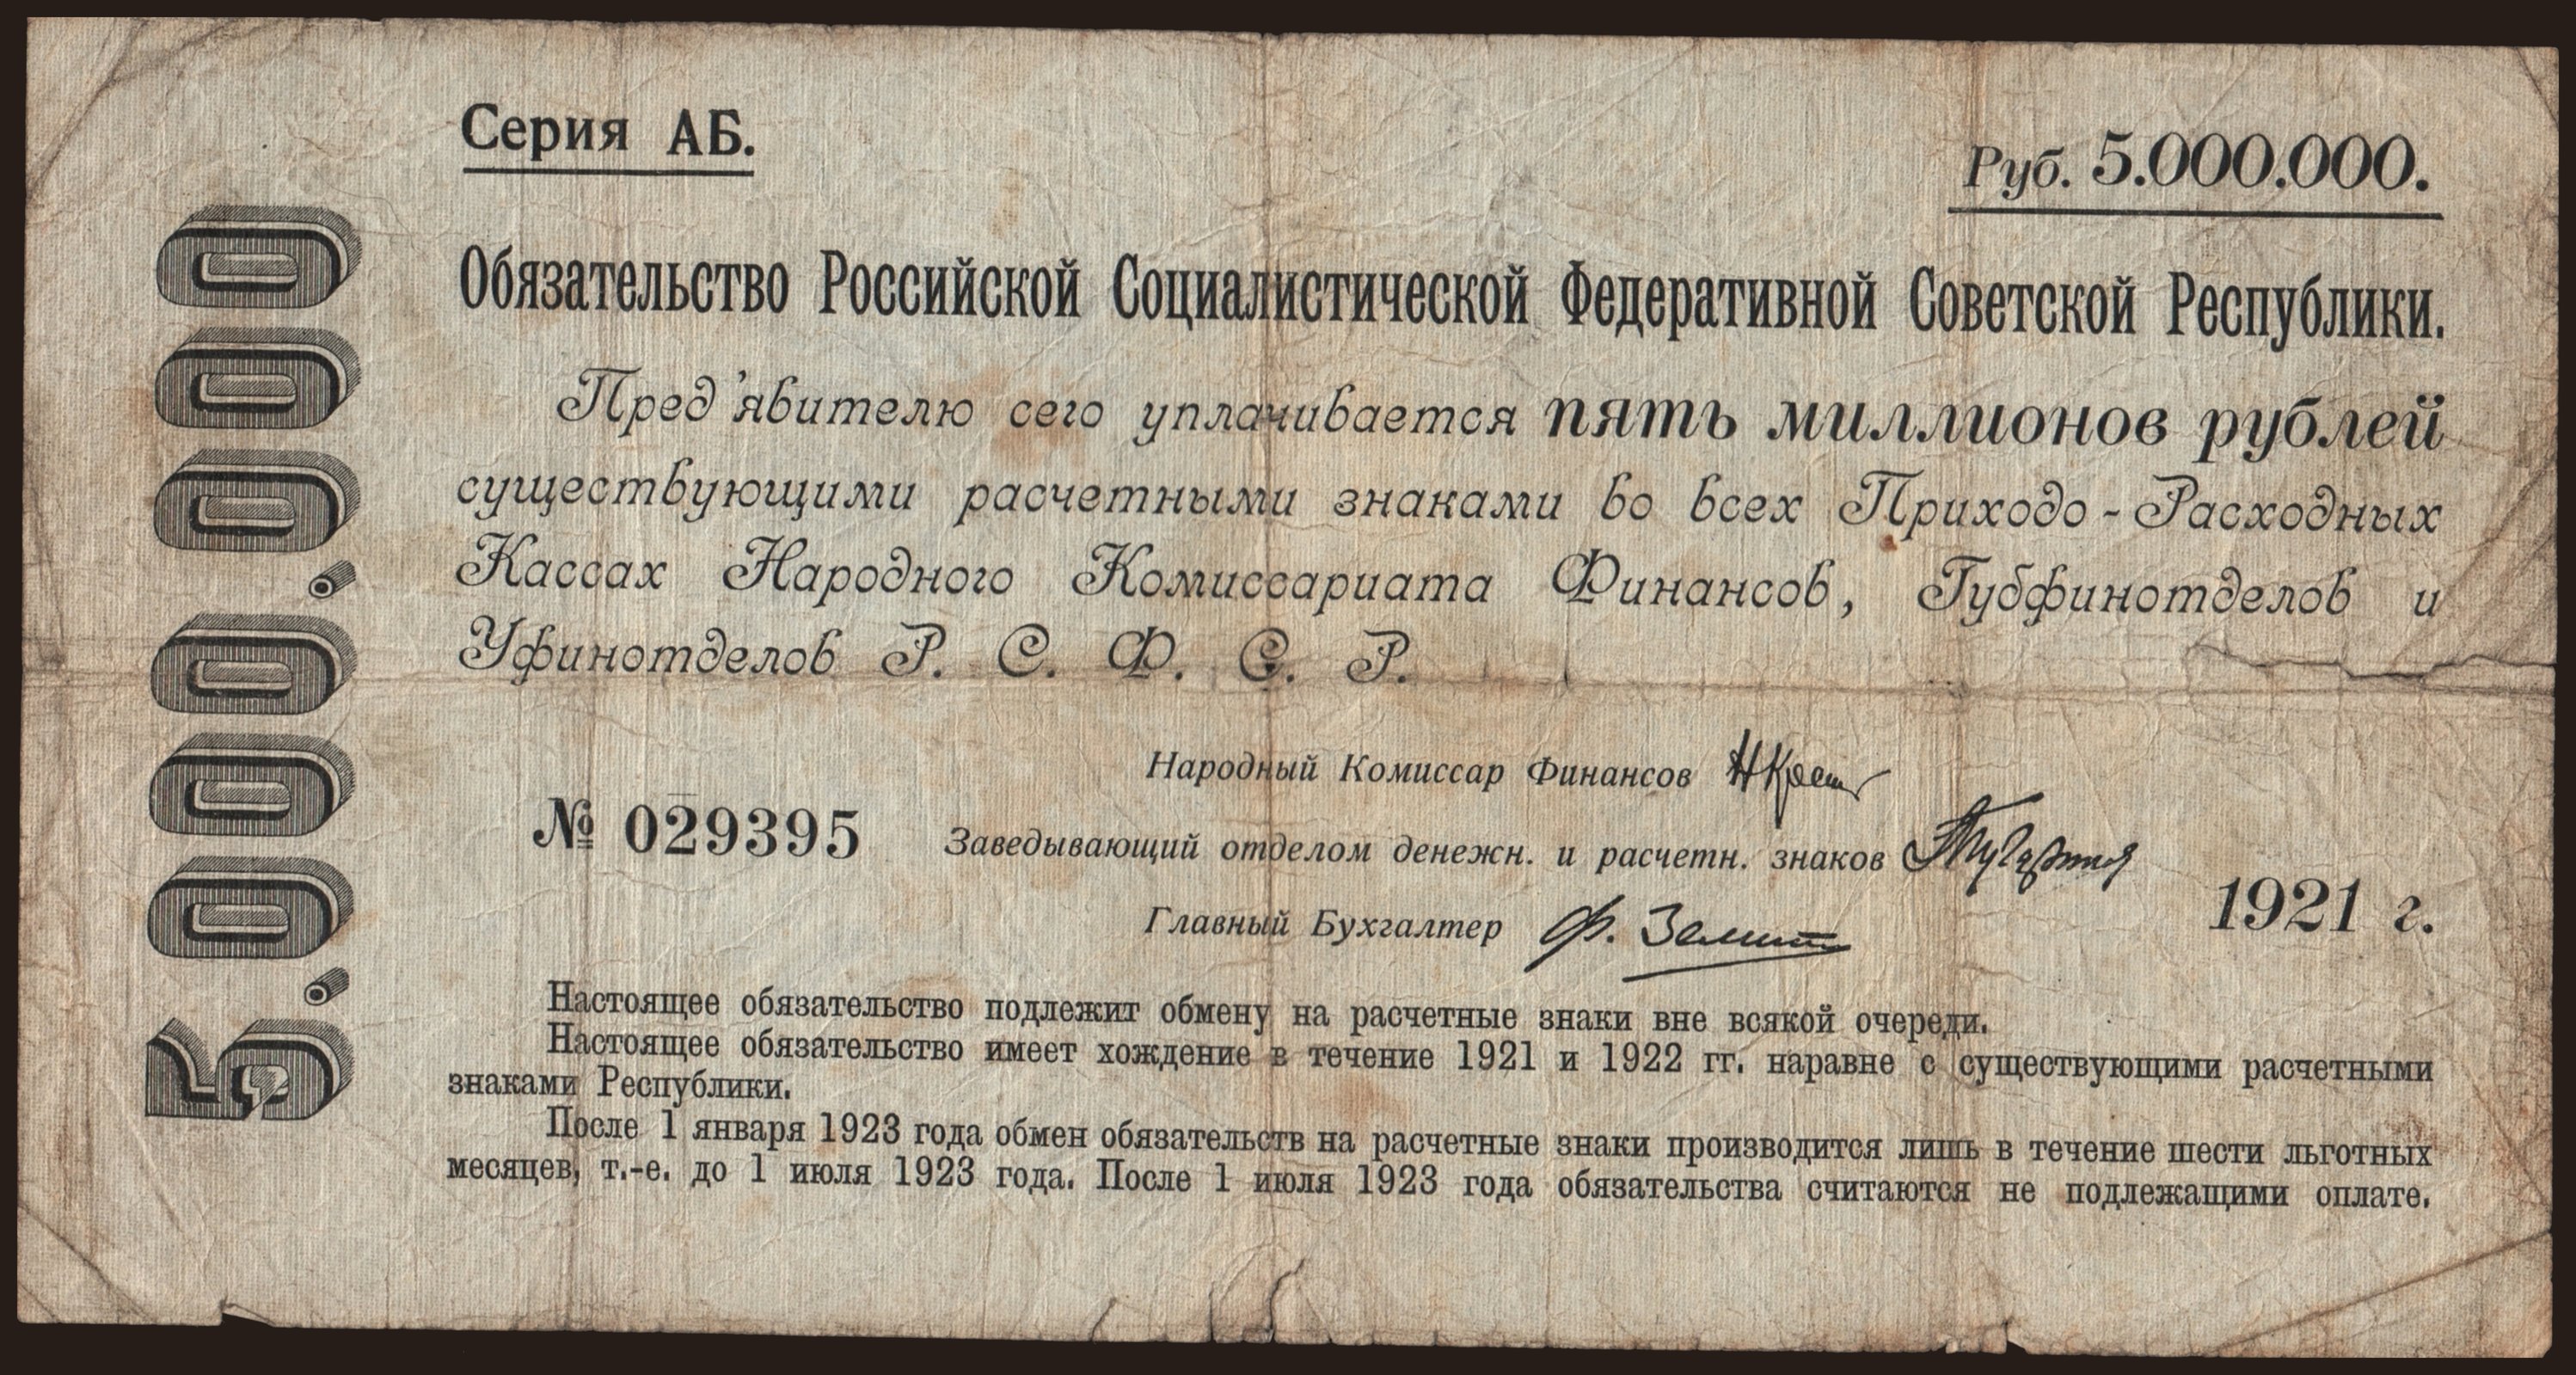 5.000.000 rubel, 1921